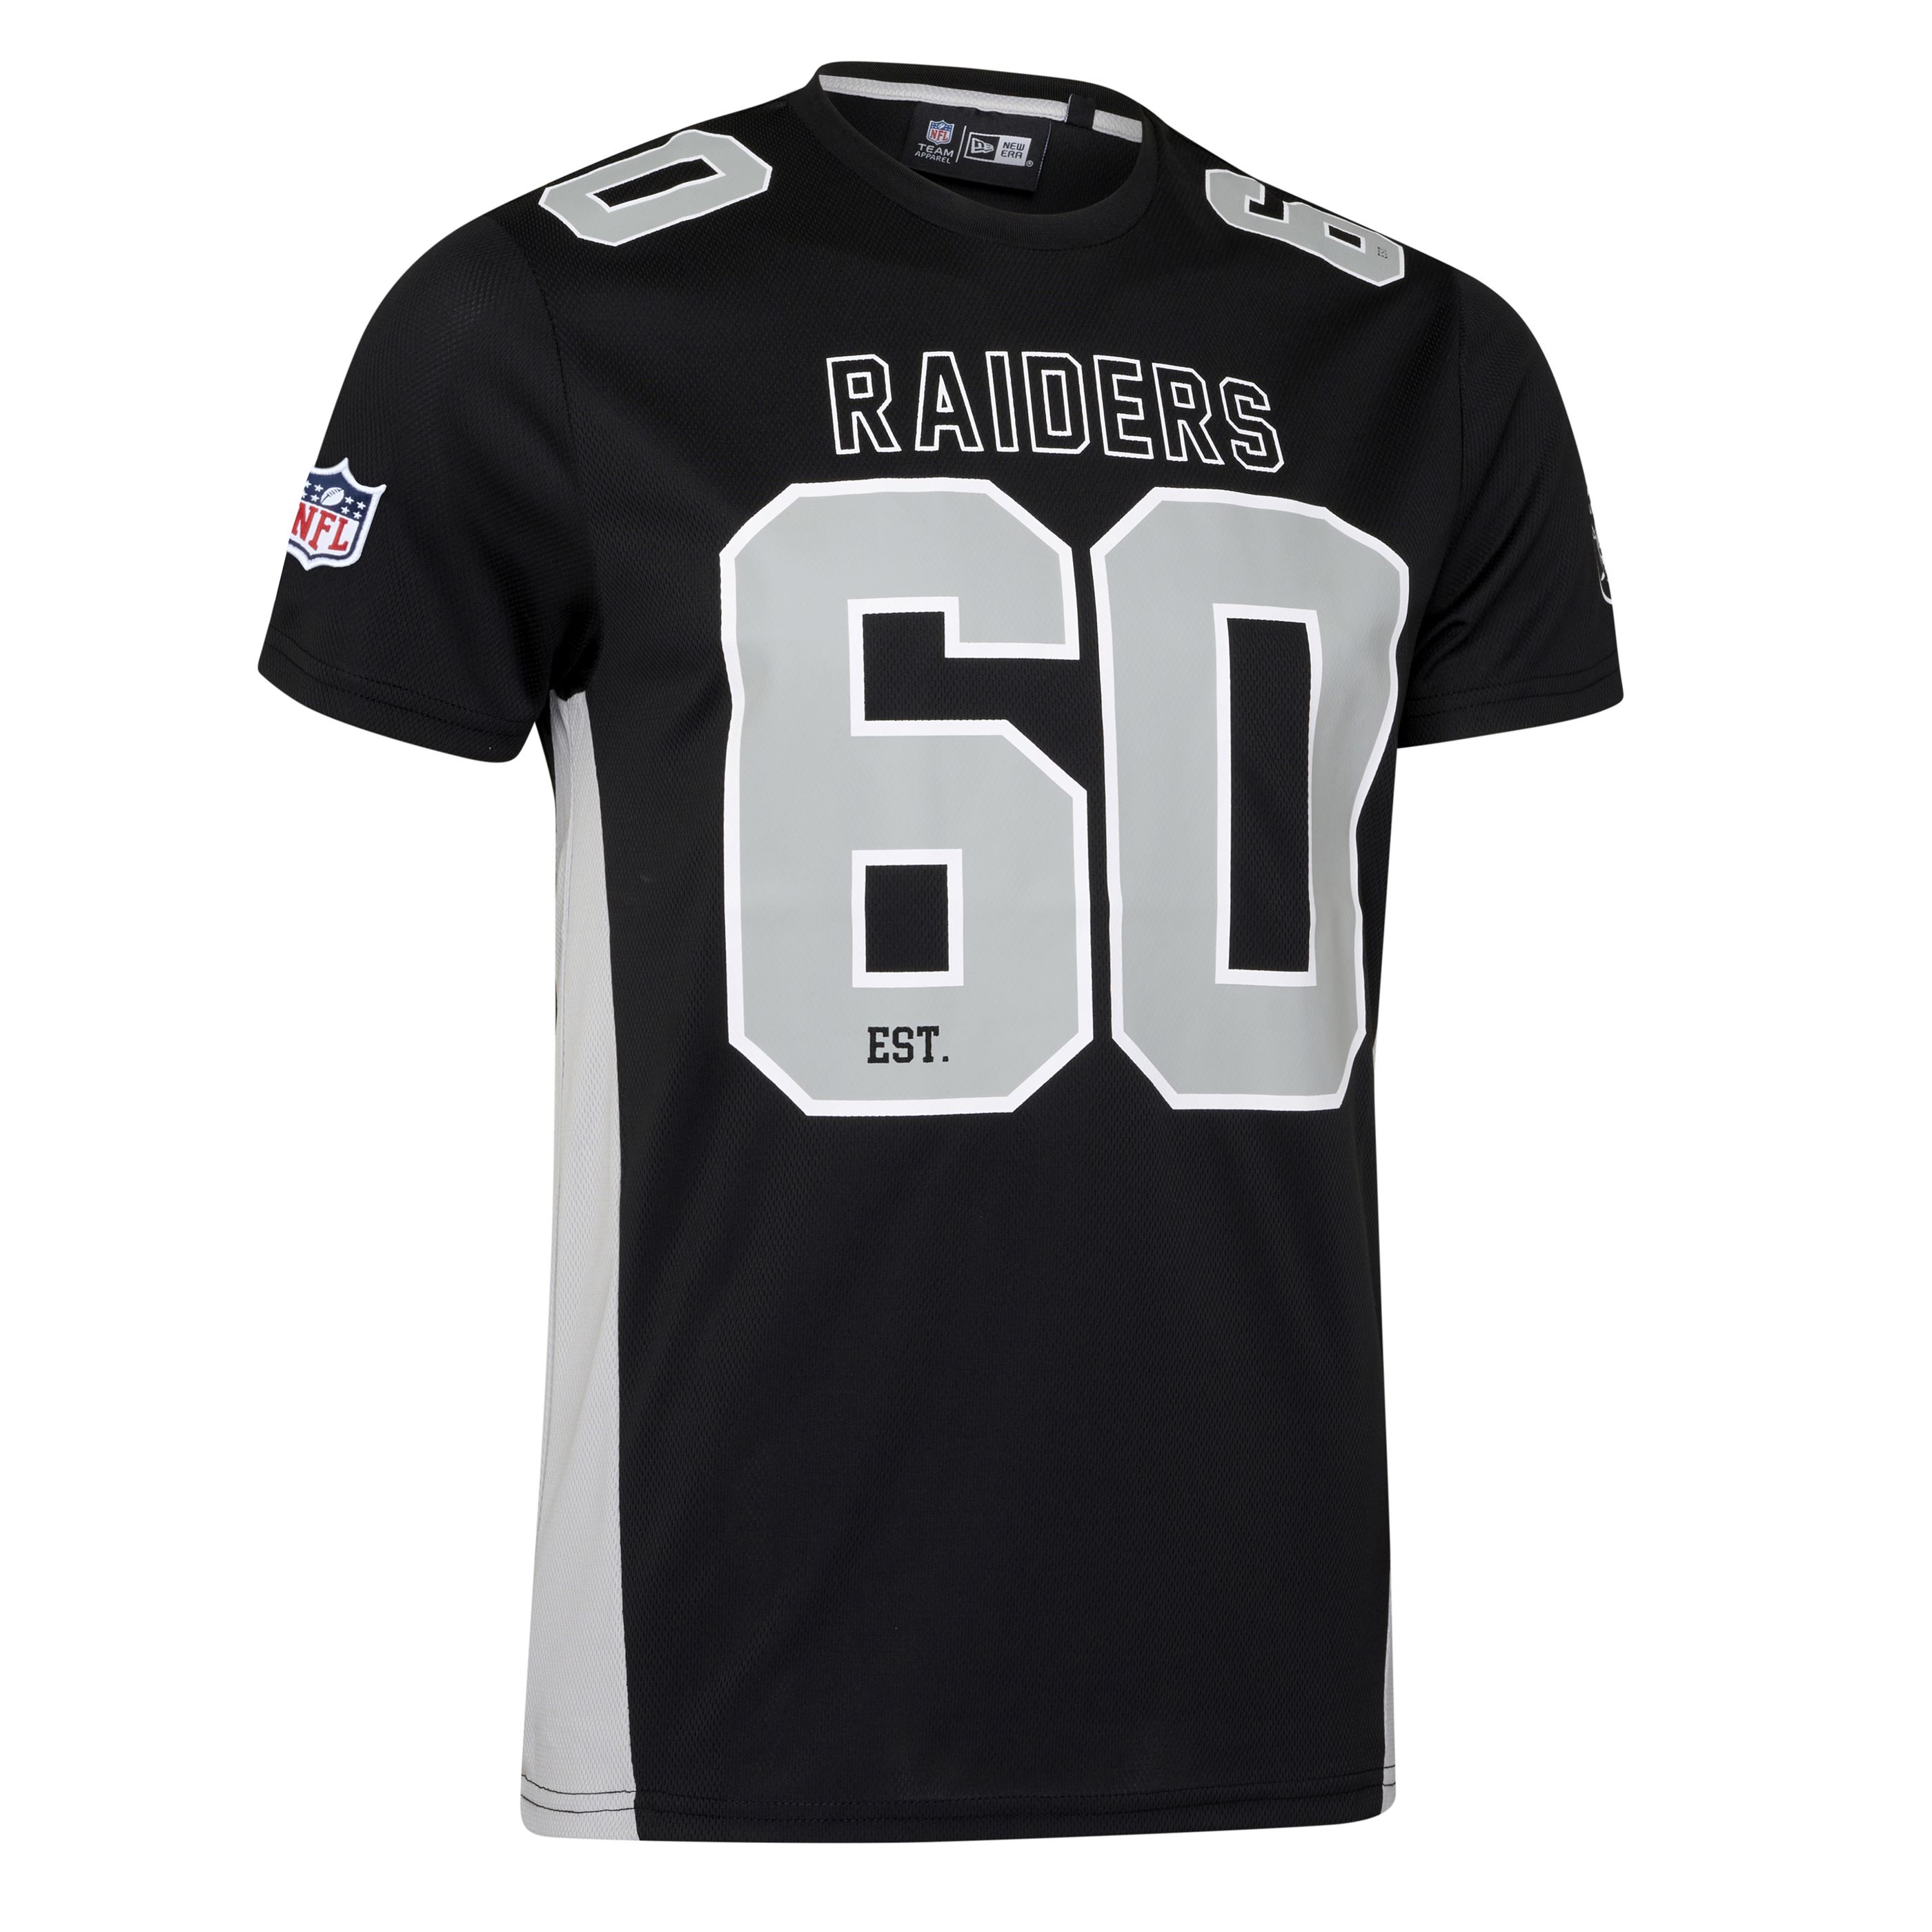 Las Vegas Raiders NFL Established Number Mesh Tee Black T-Shirt New Era